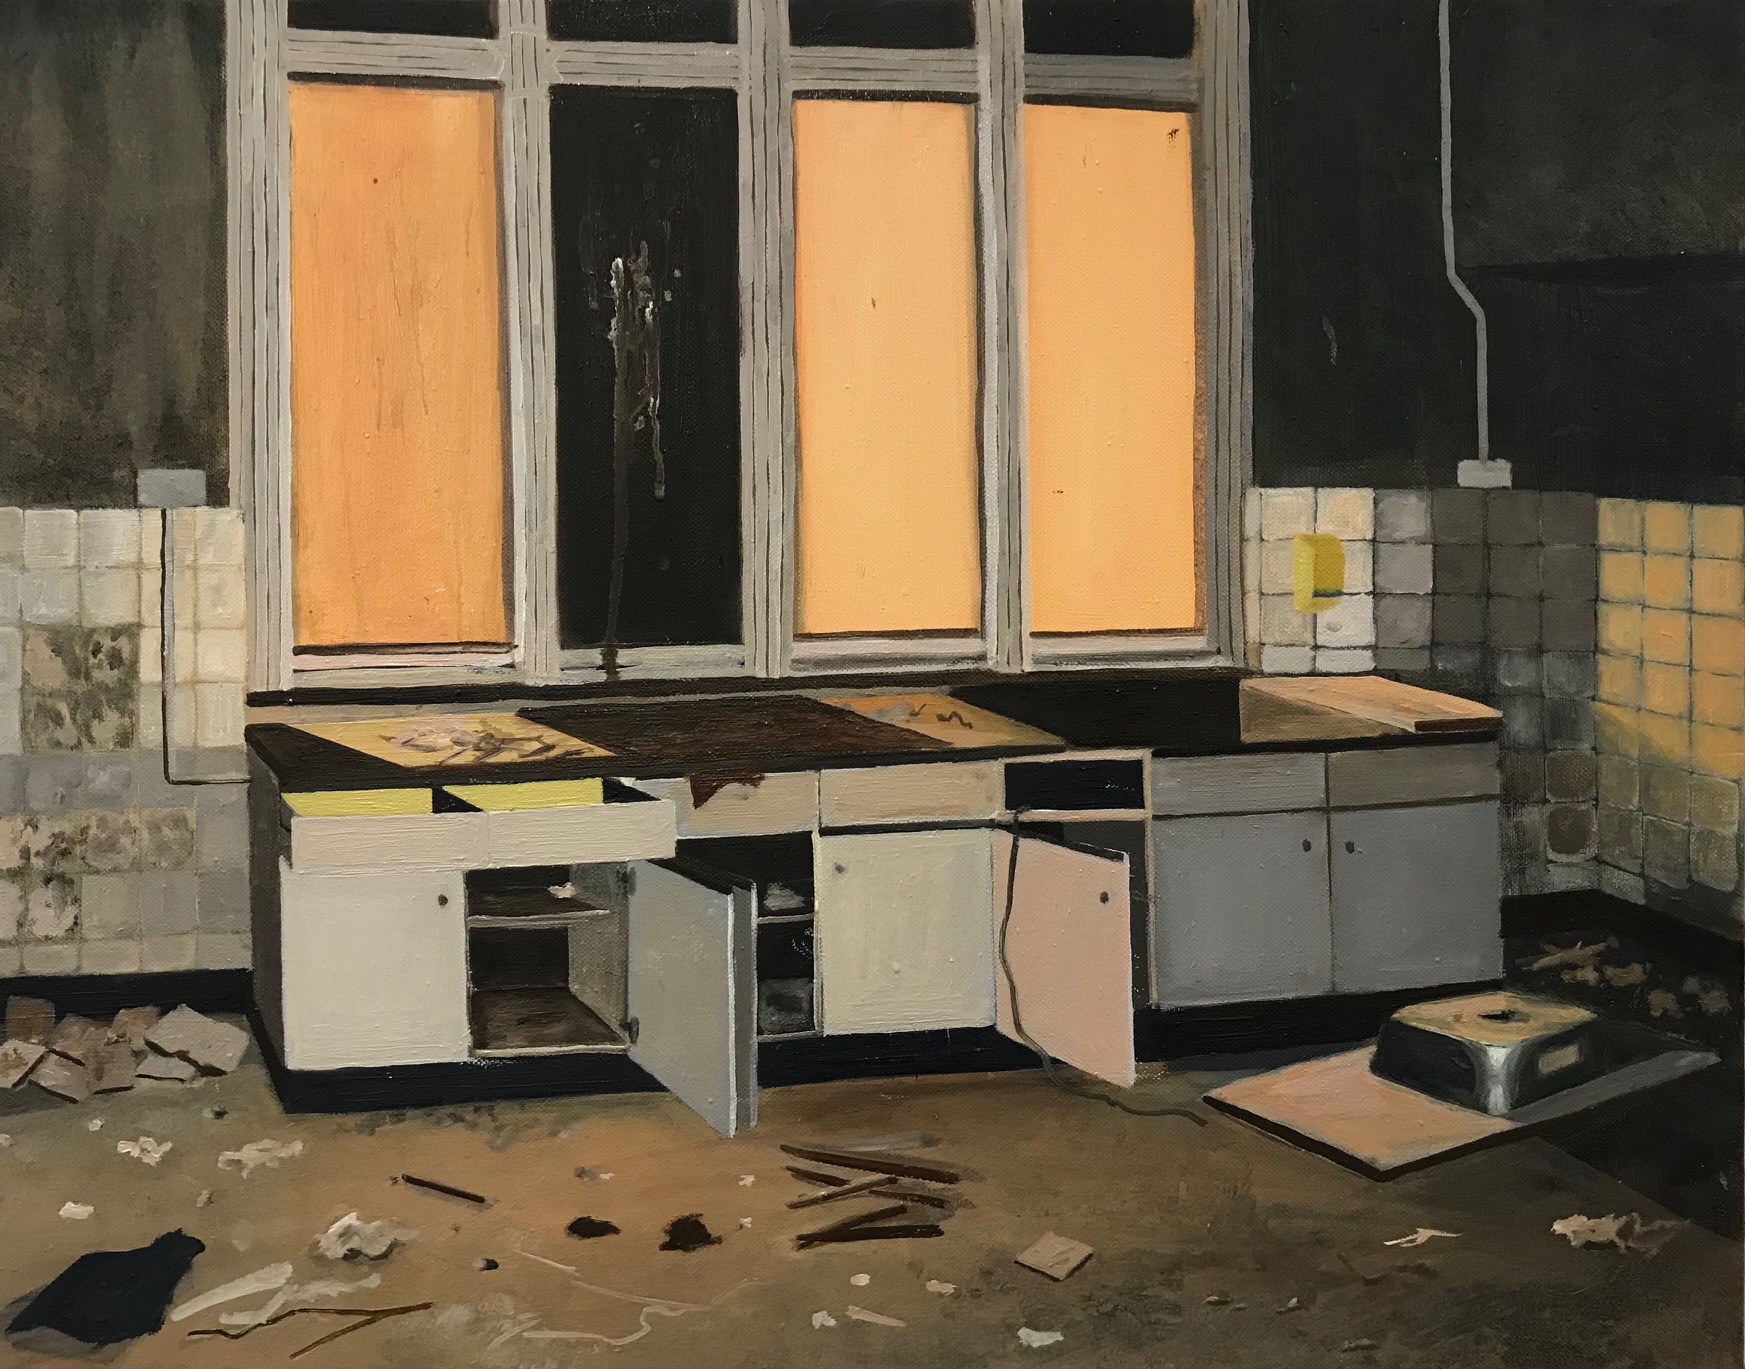 'The Aftermath', James Birkin, Oil on canvas, 48 x 60 cm